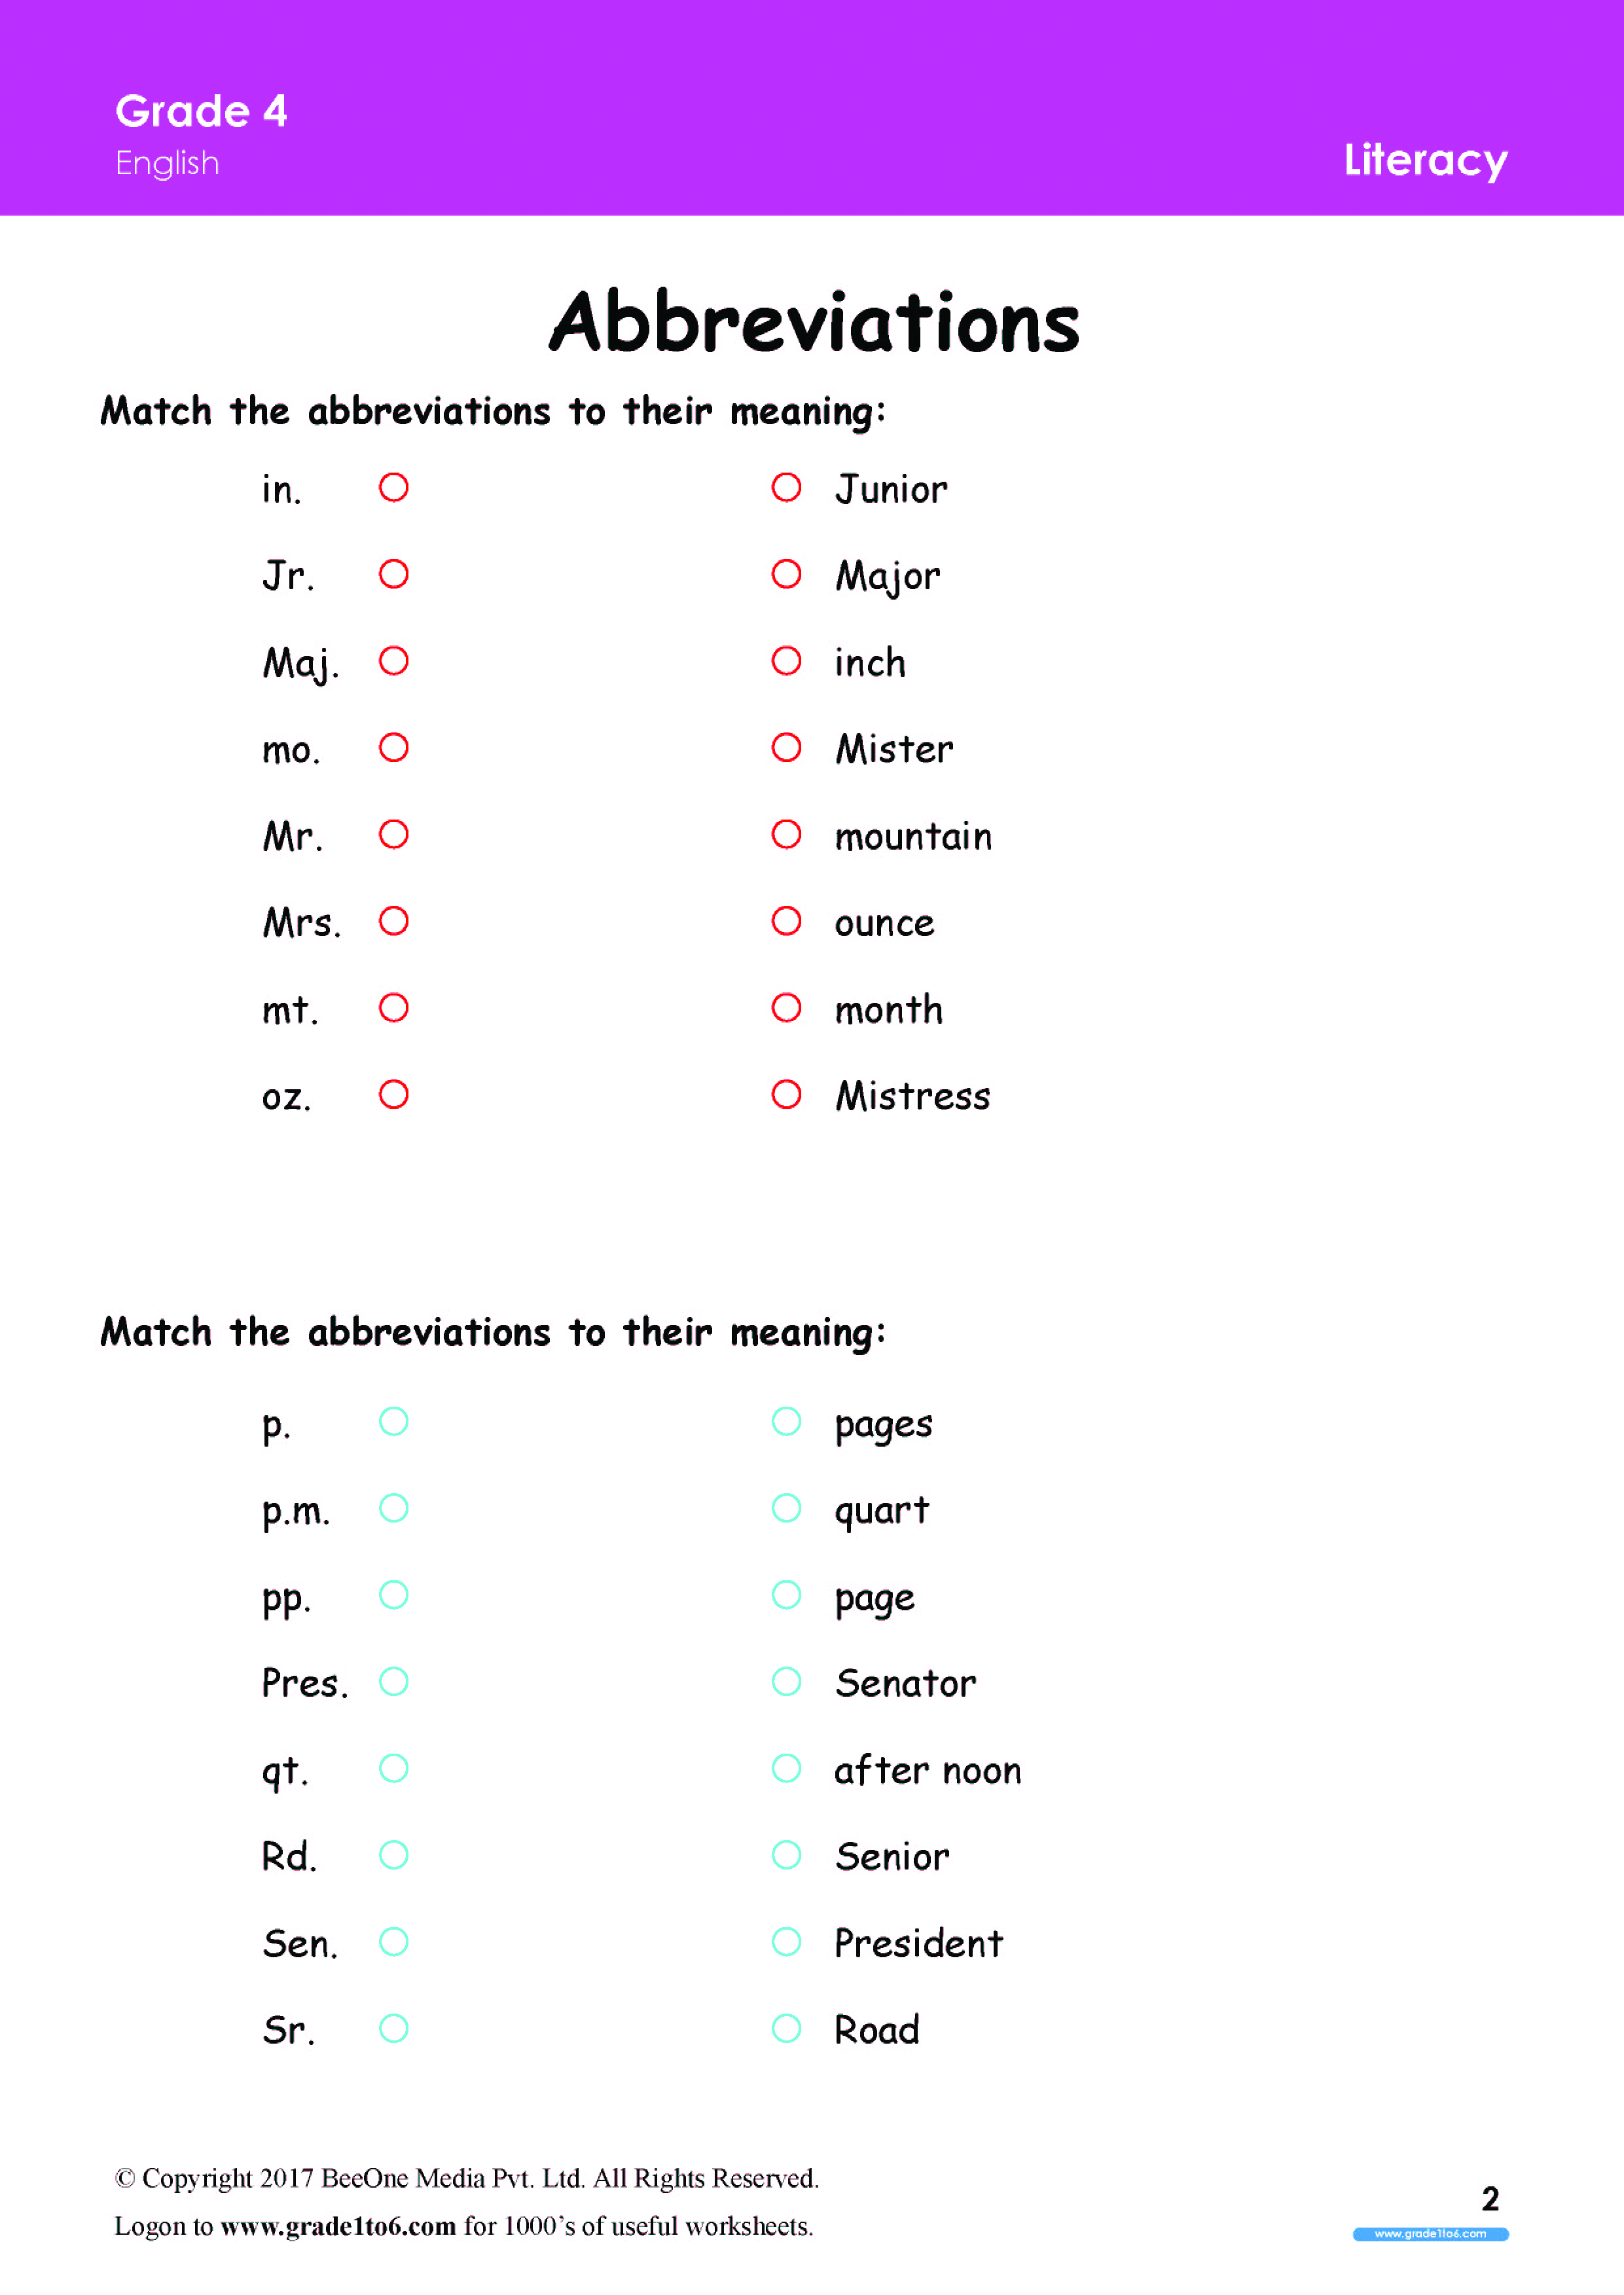 abbreviations-worksheets-grade-4-www-grade1to6